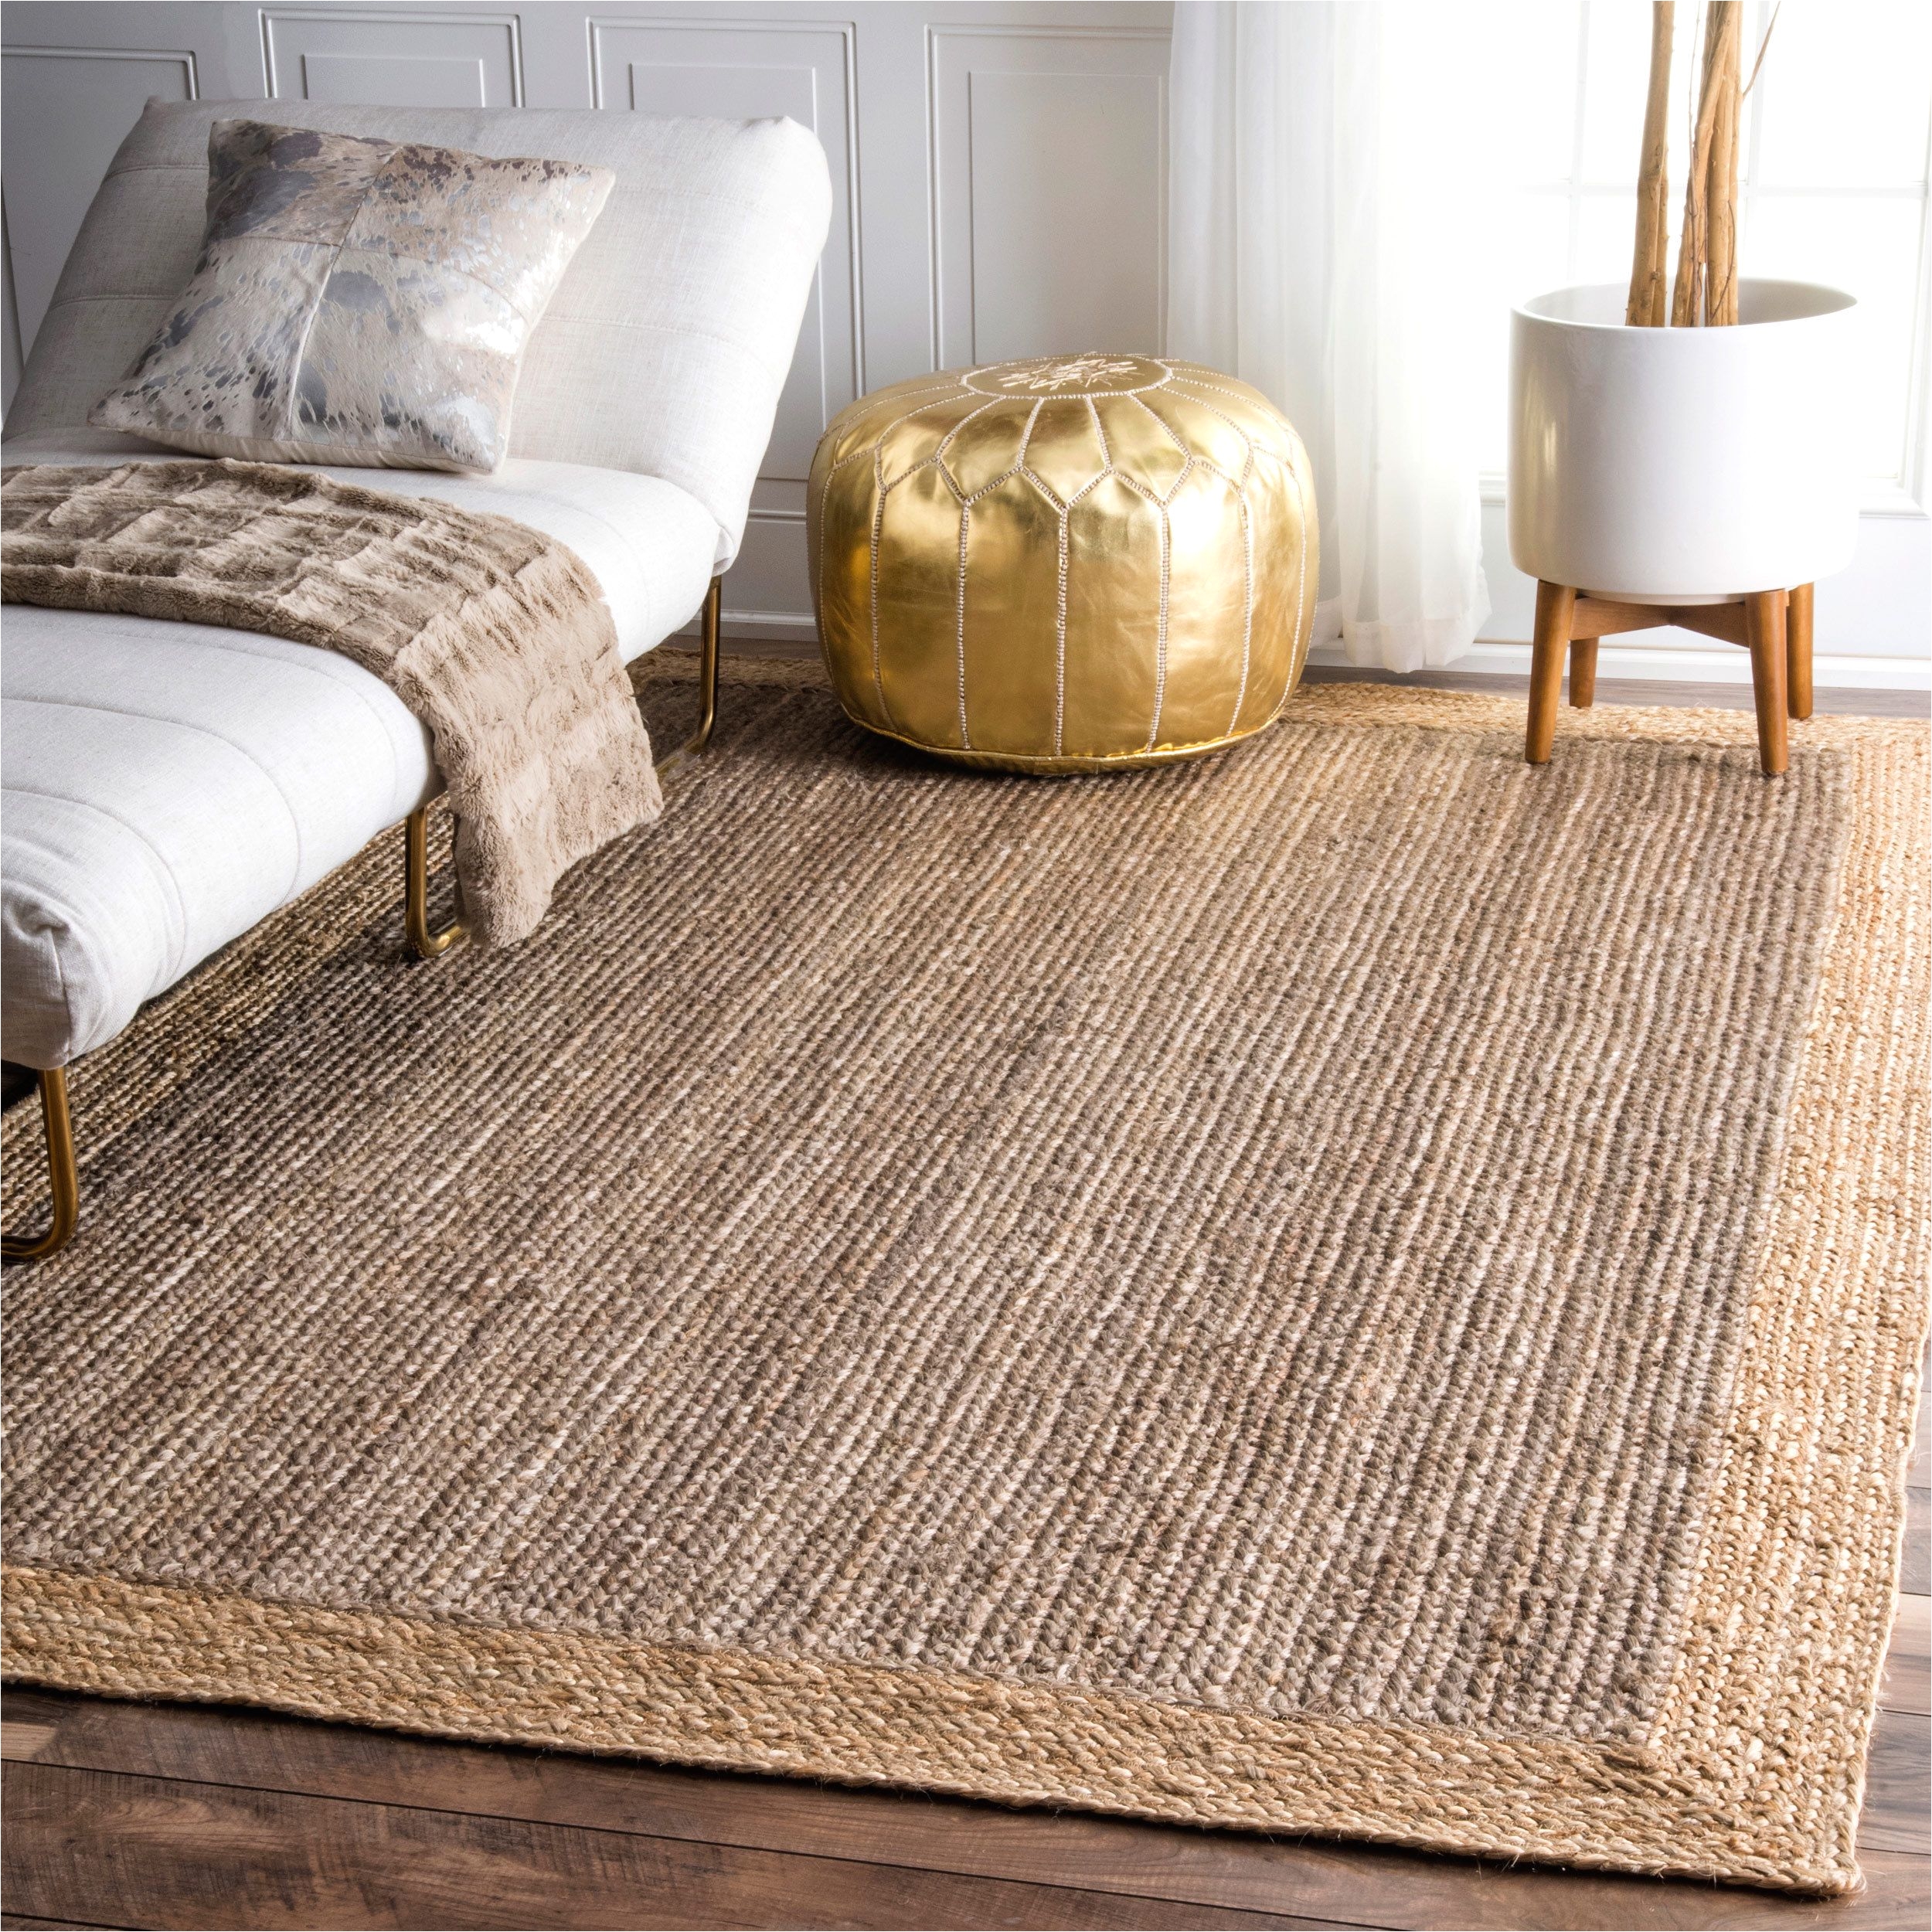 nuloom alexa eco natural fiber braided reversible border jute grey rug 5 x 8 grey beige size 5 x 8